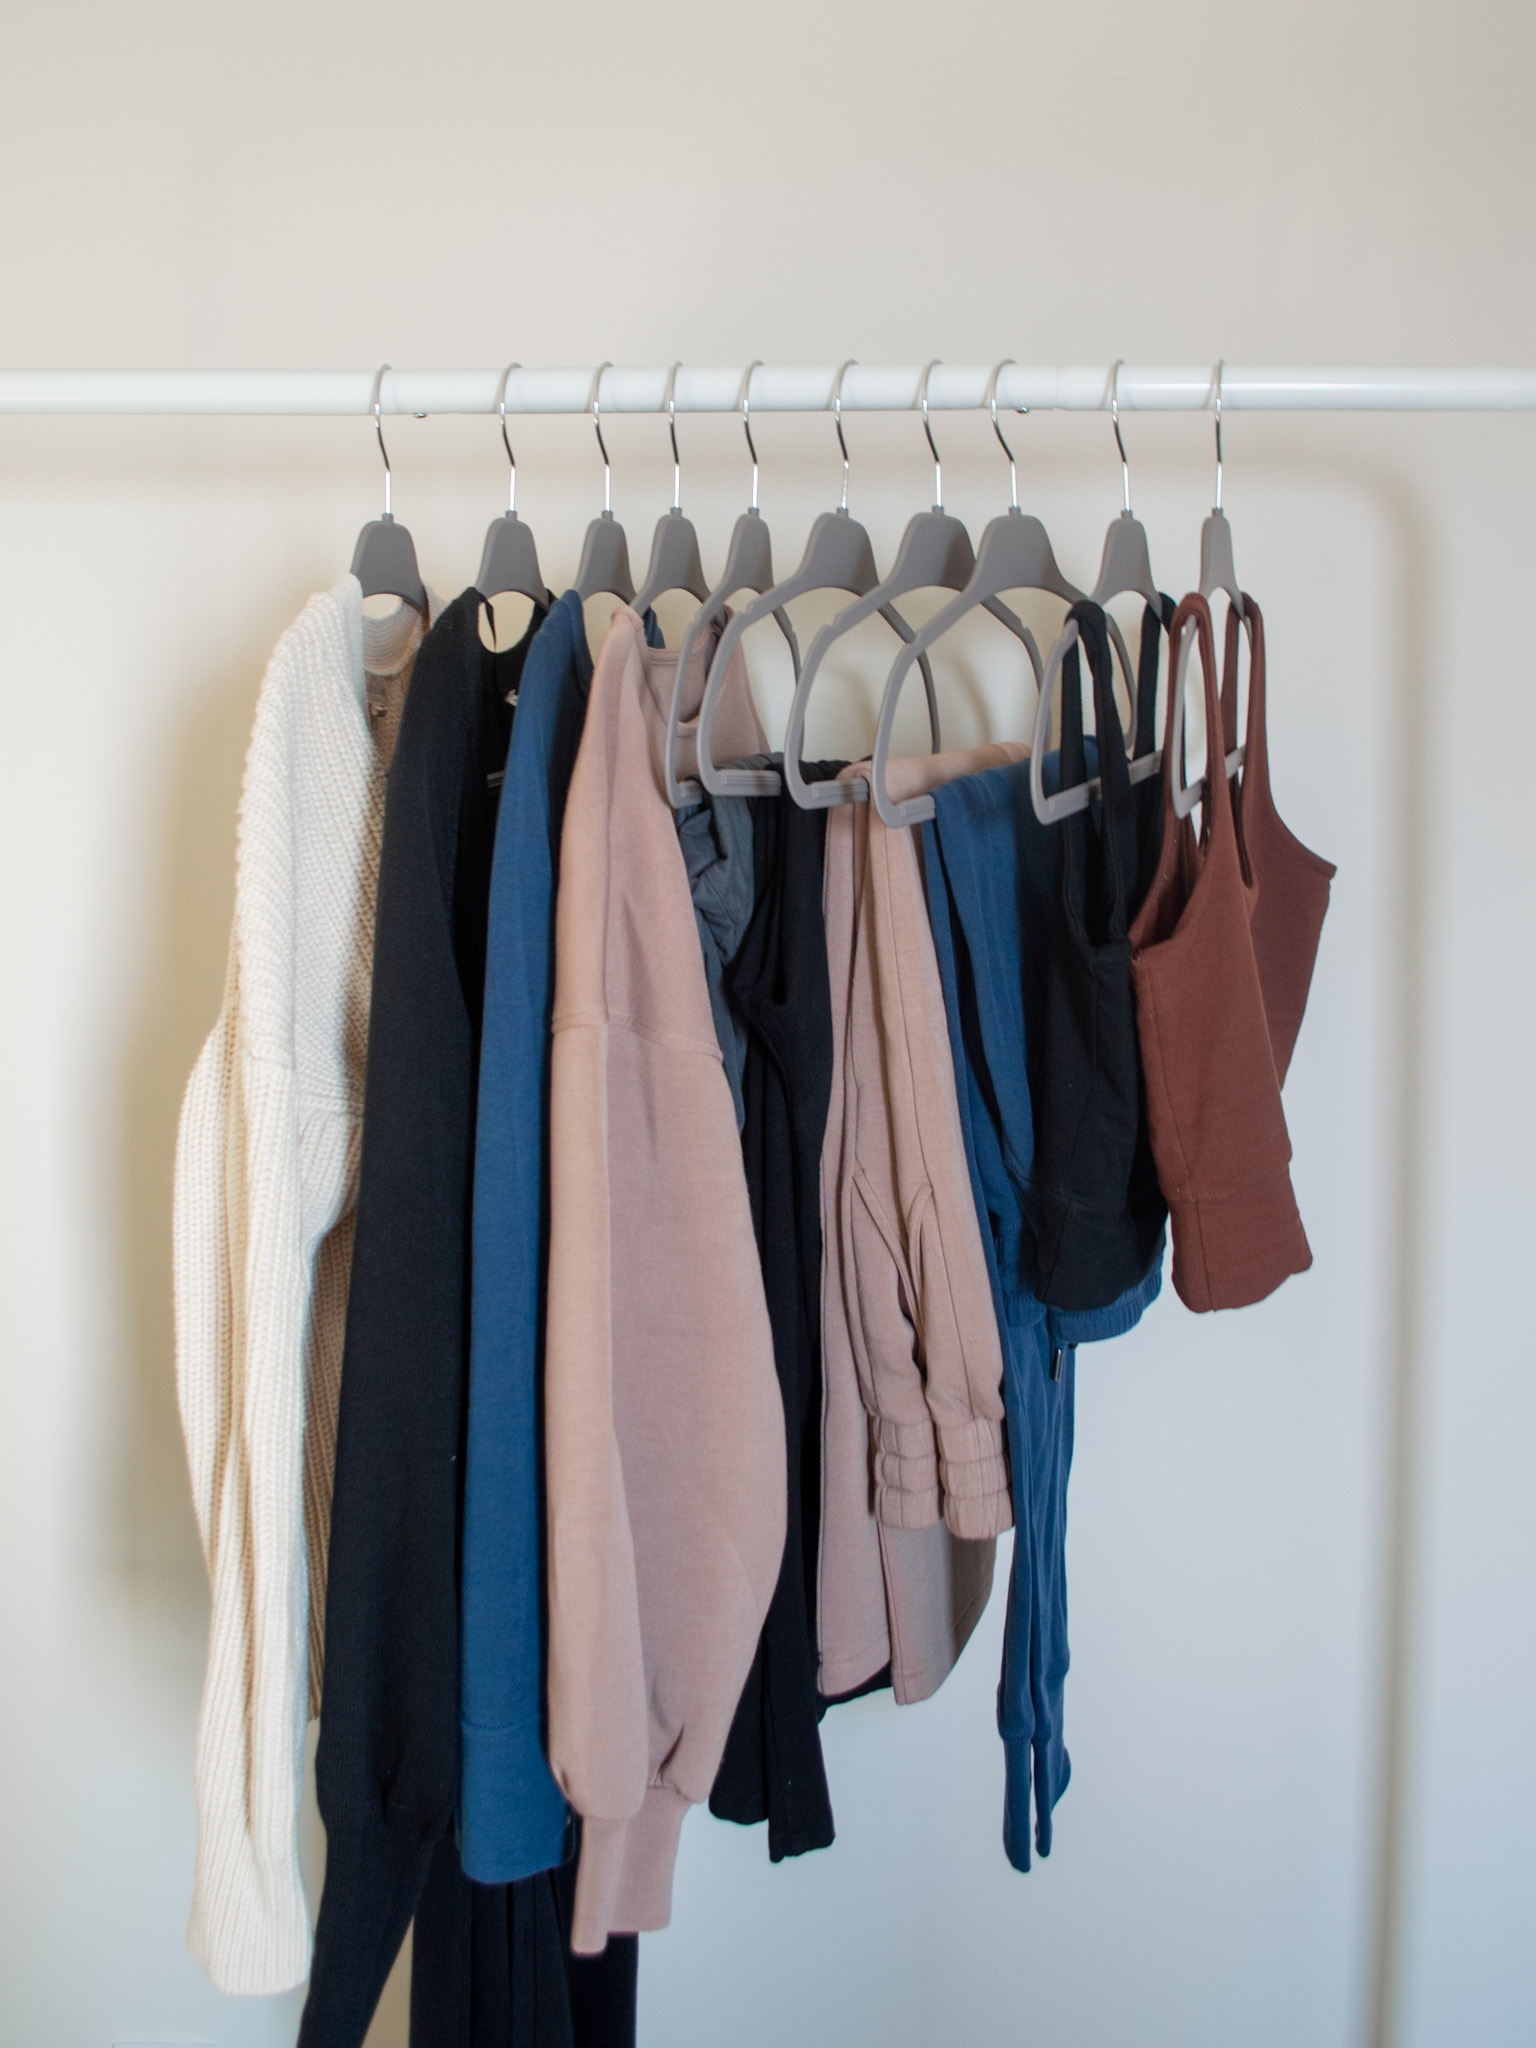 13 Simple Clothing Basics to Start a “Slow Fashion” Wardrobe With